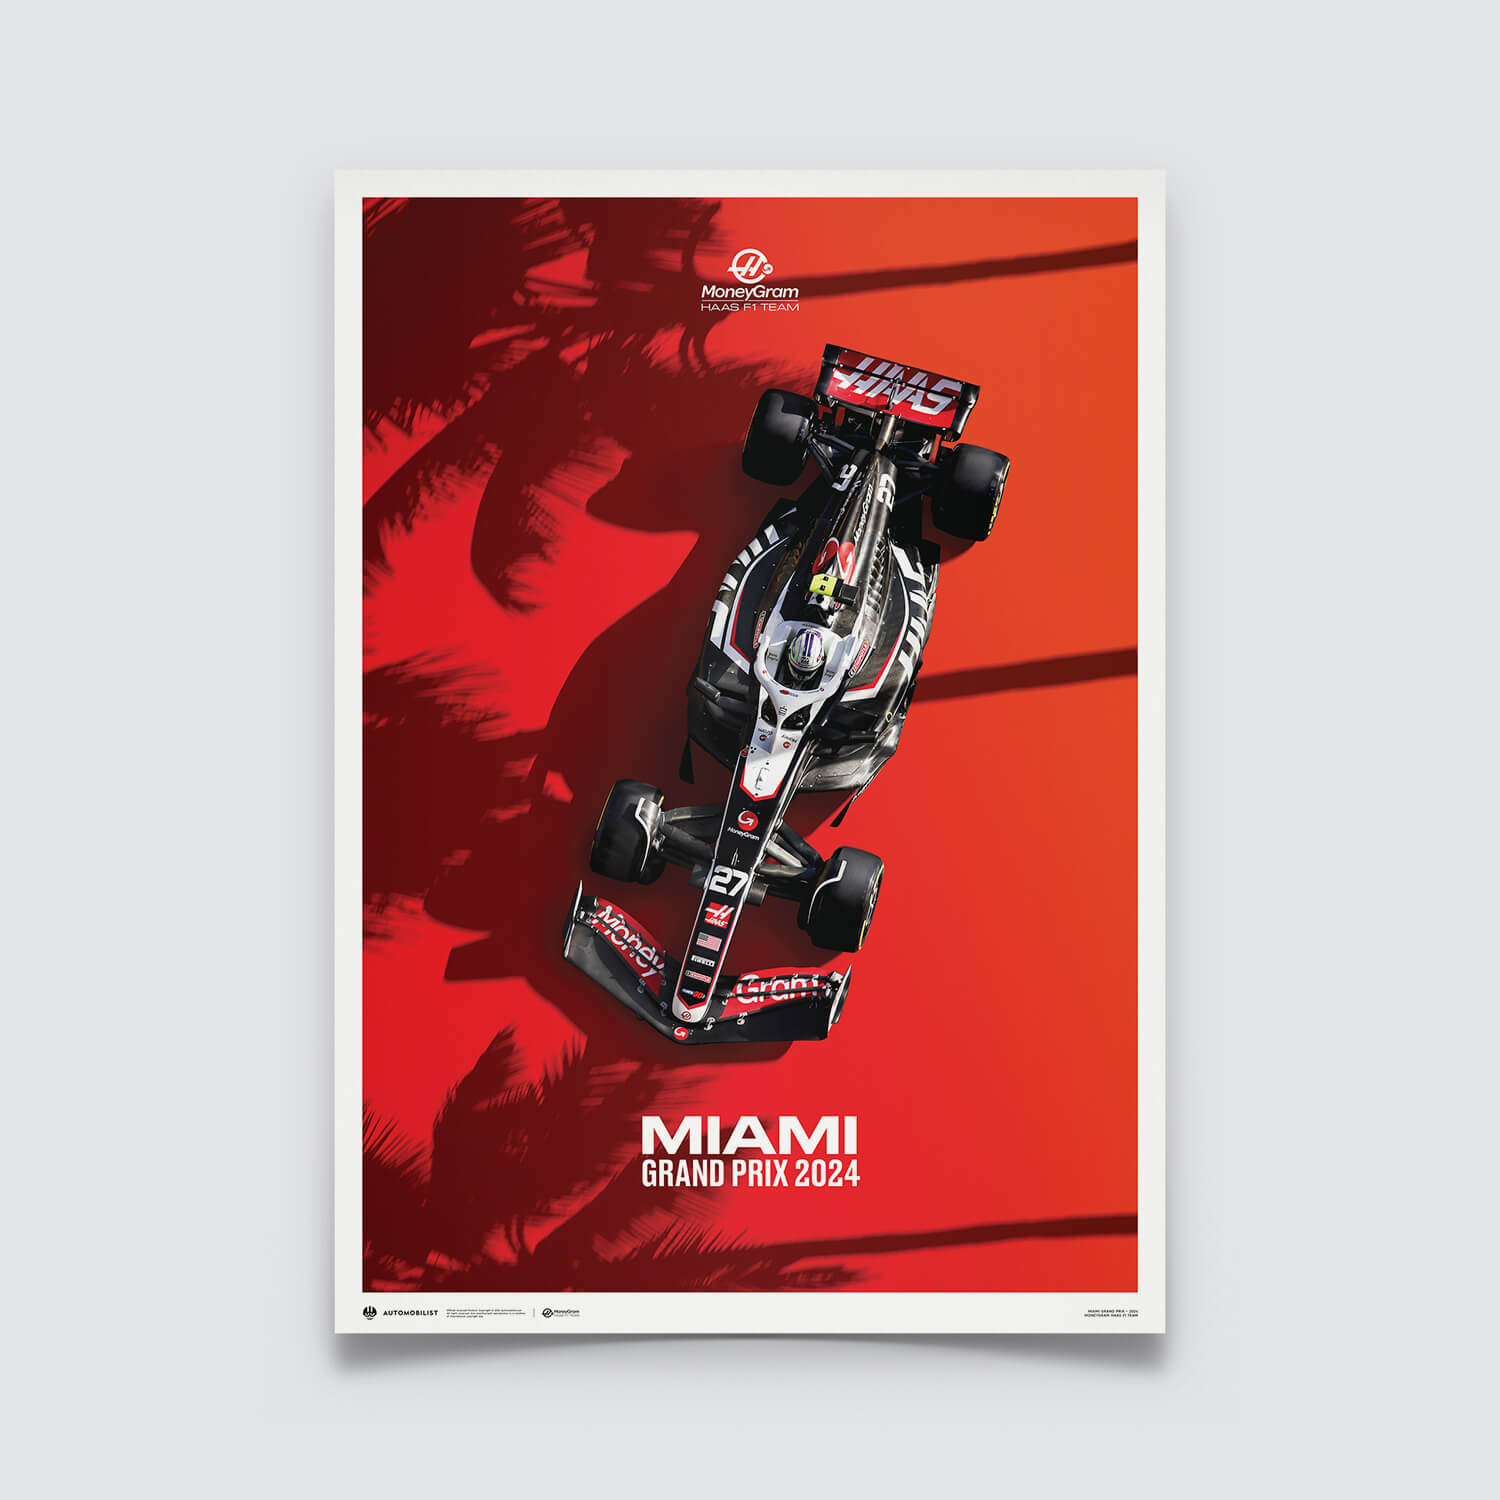 MoneyGram Haas F1 Team – Grand Prix de Miami – 2024